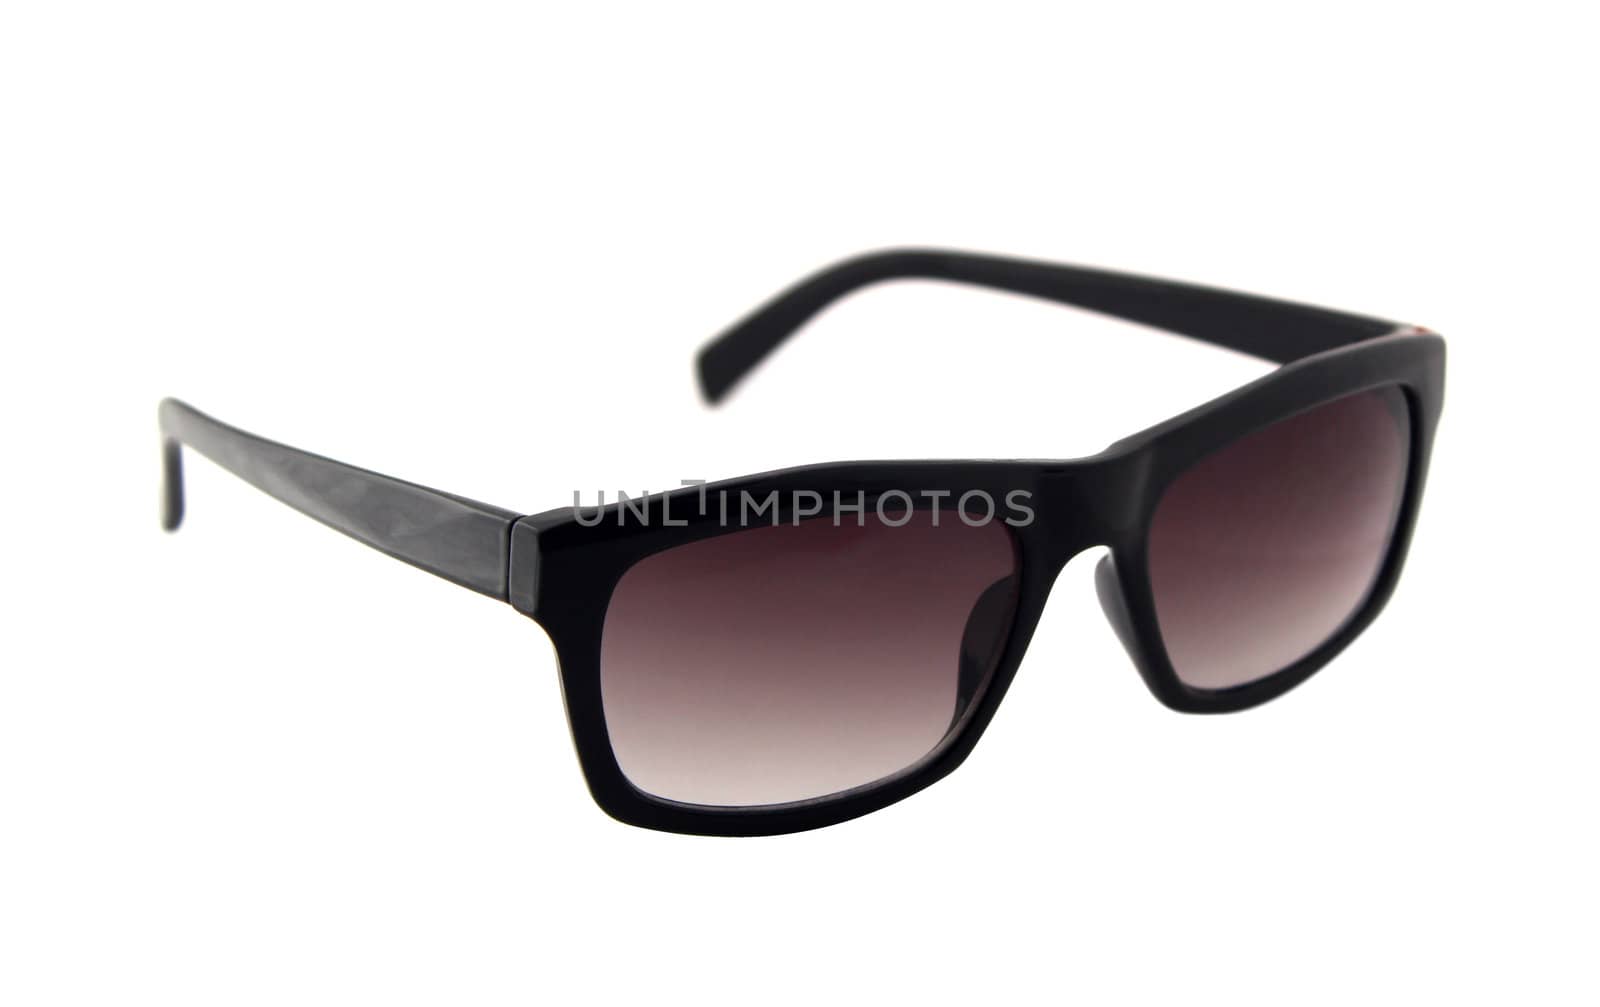 Black sunglasses by catalinr